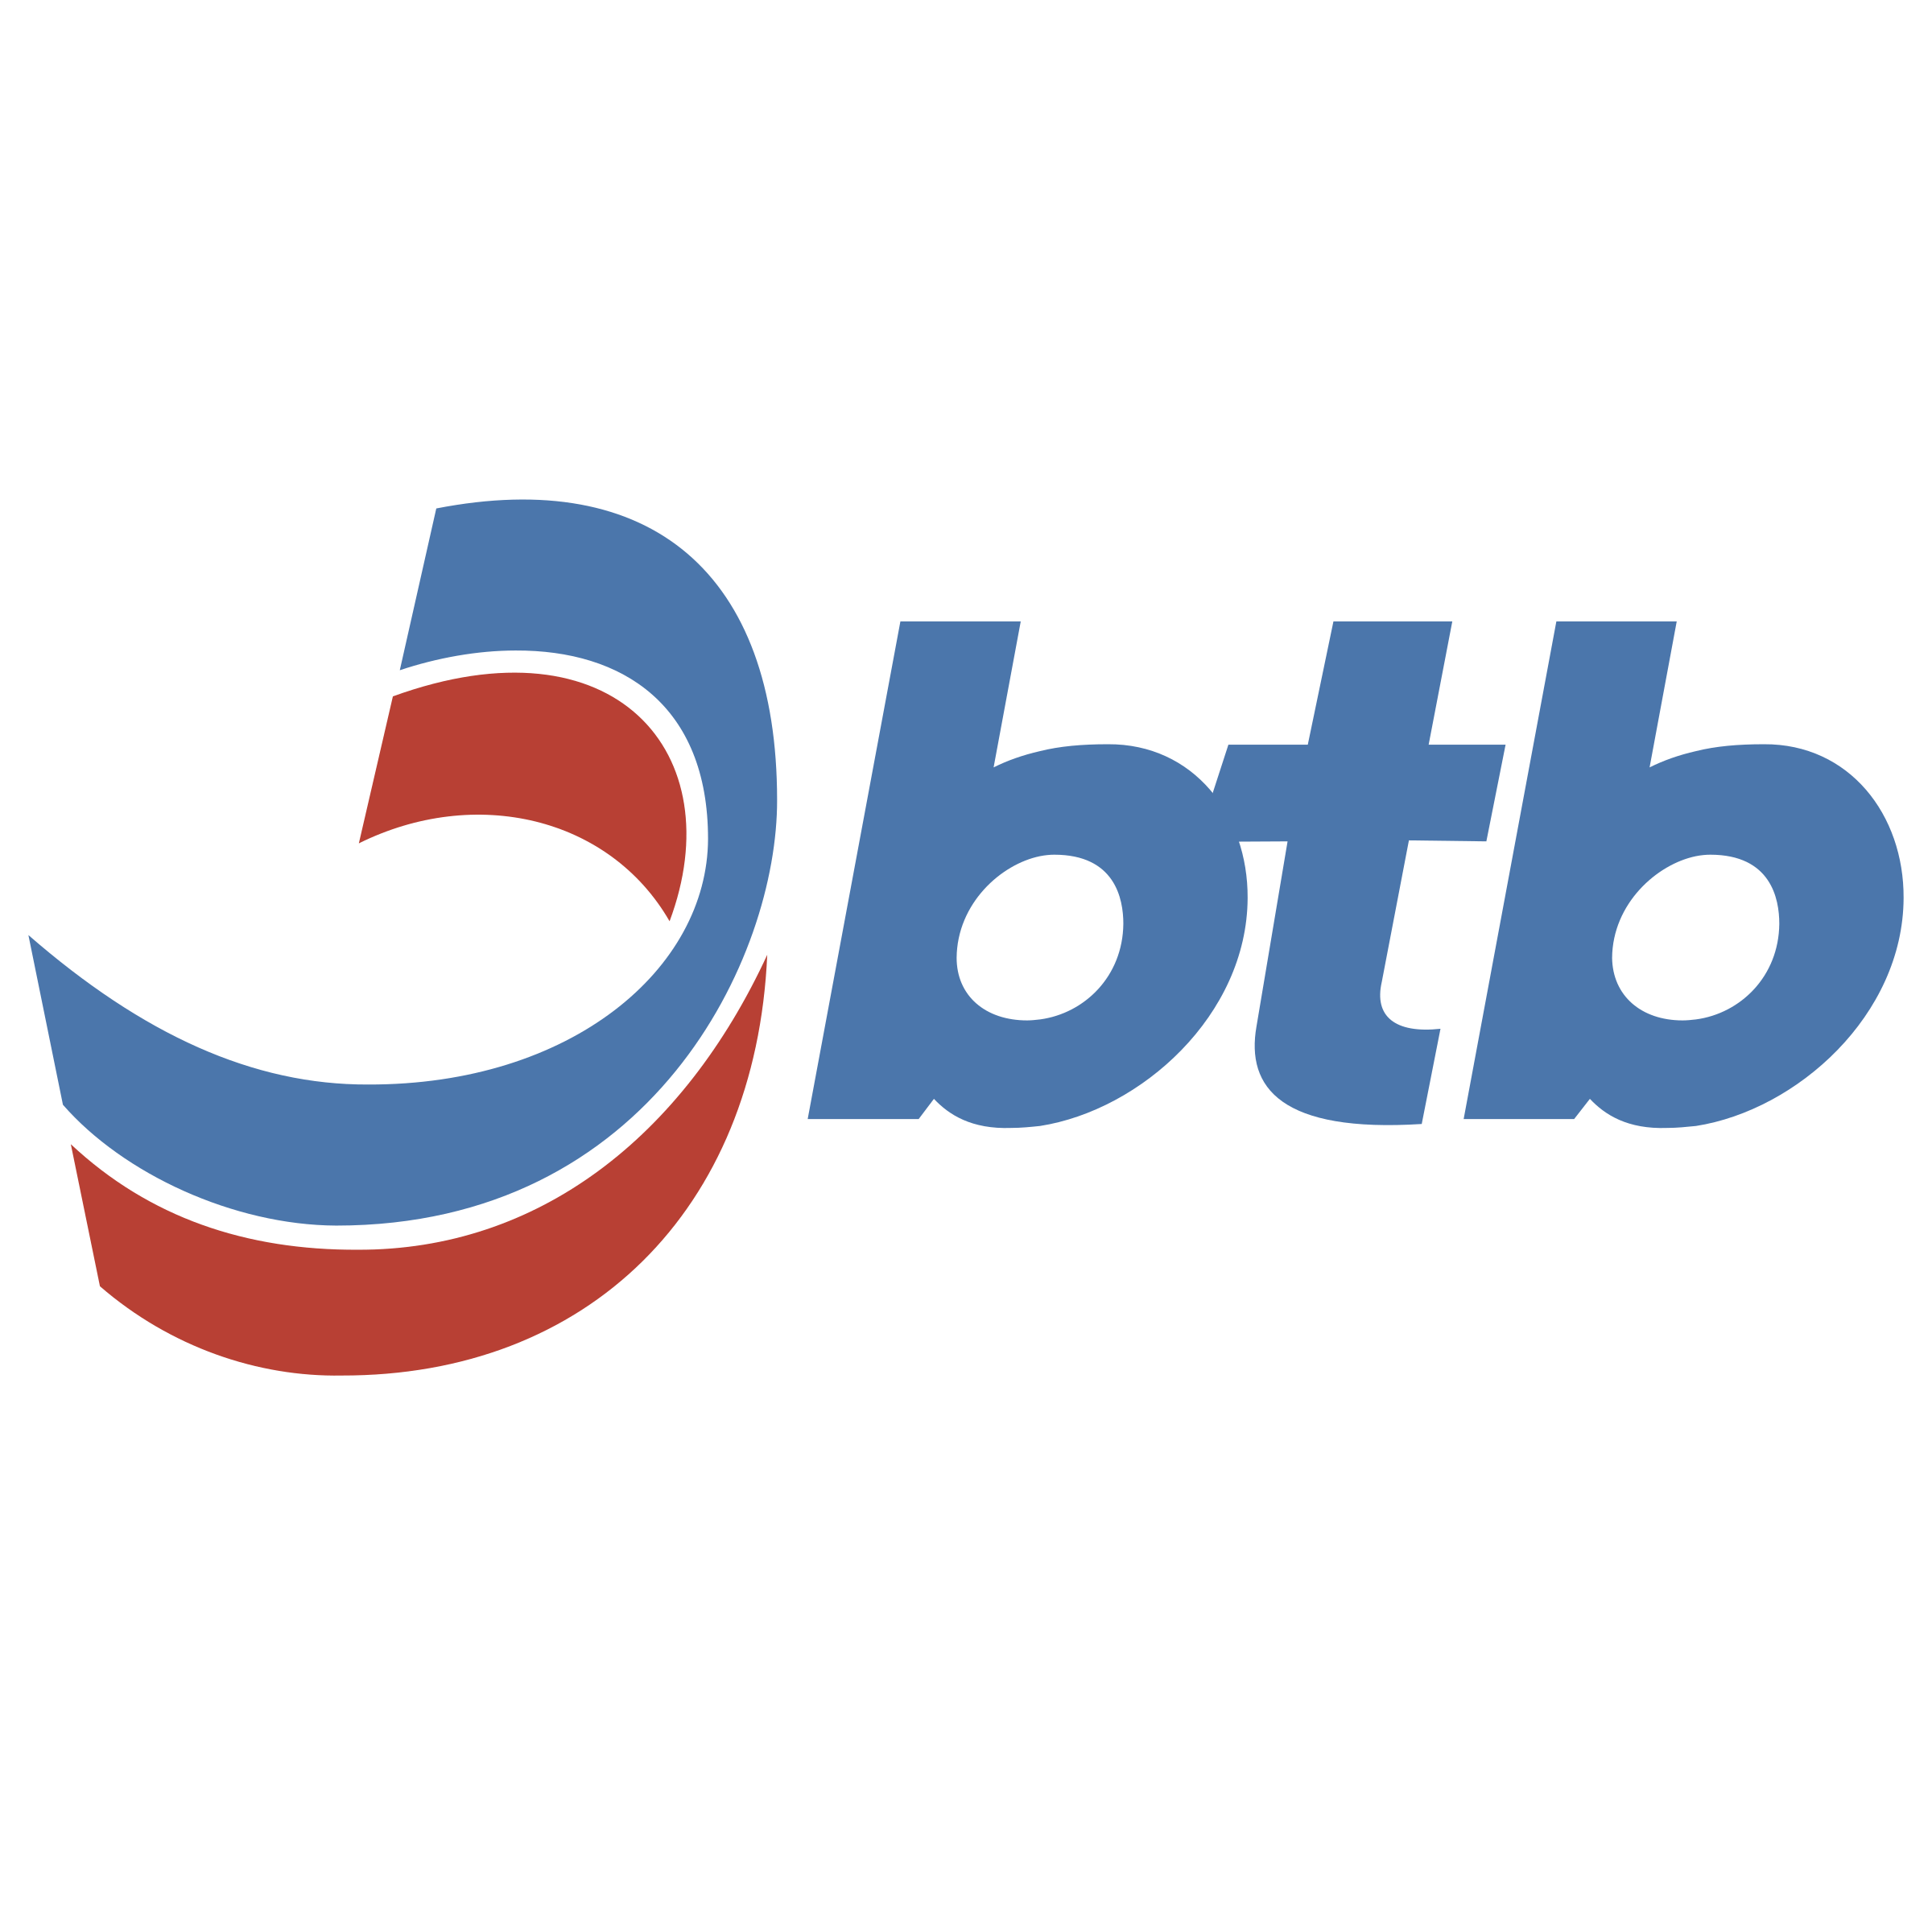 BTB Logo - BTB Logo PNG Transparent & SVG Vector